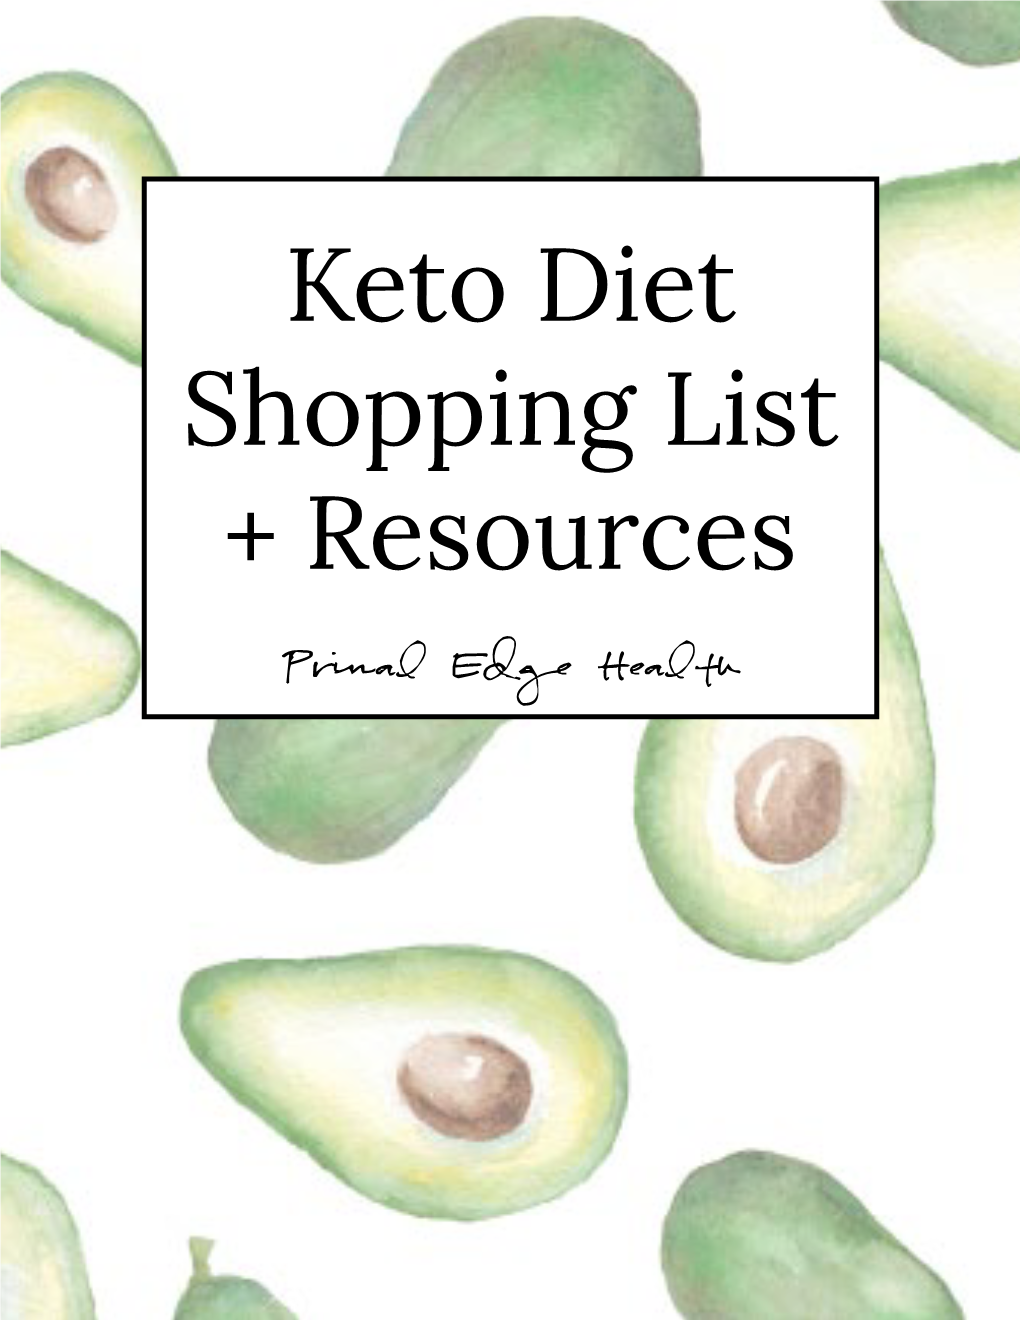 Keto Diet Shopping List + Resources